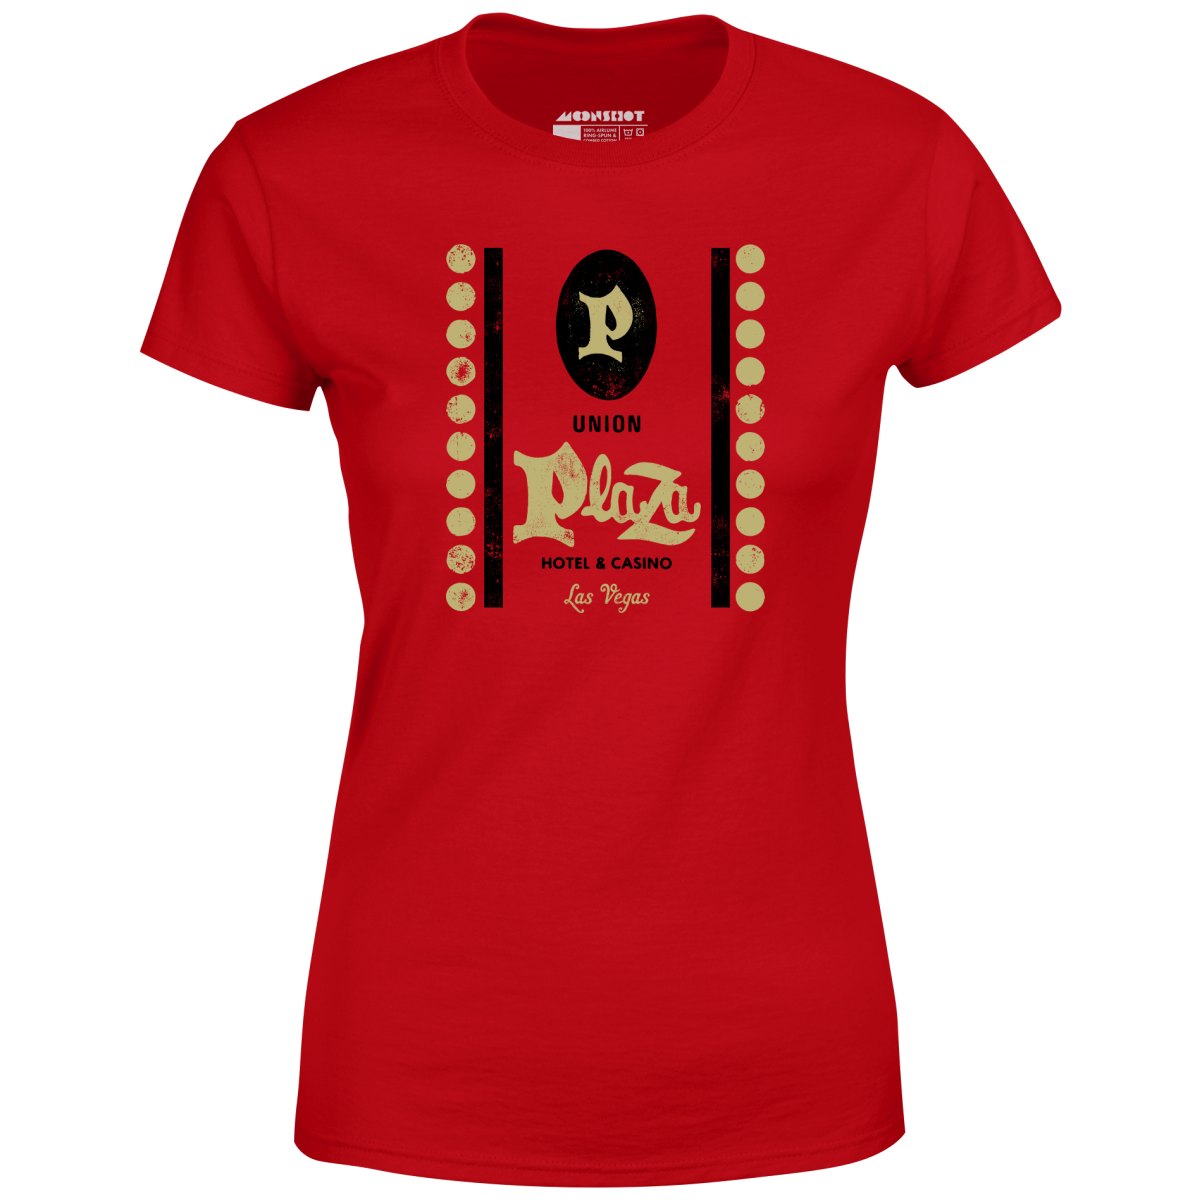 Union Plaza Hotel & Casino - Vintage Las Vegas - Women's T-Shirt